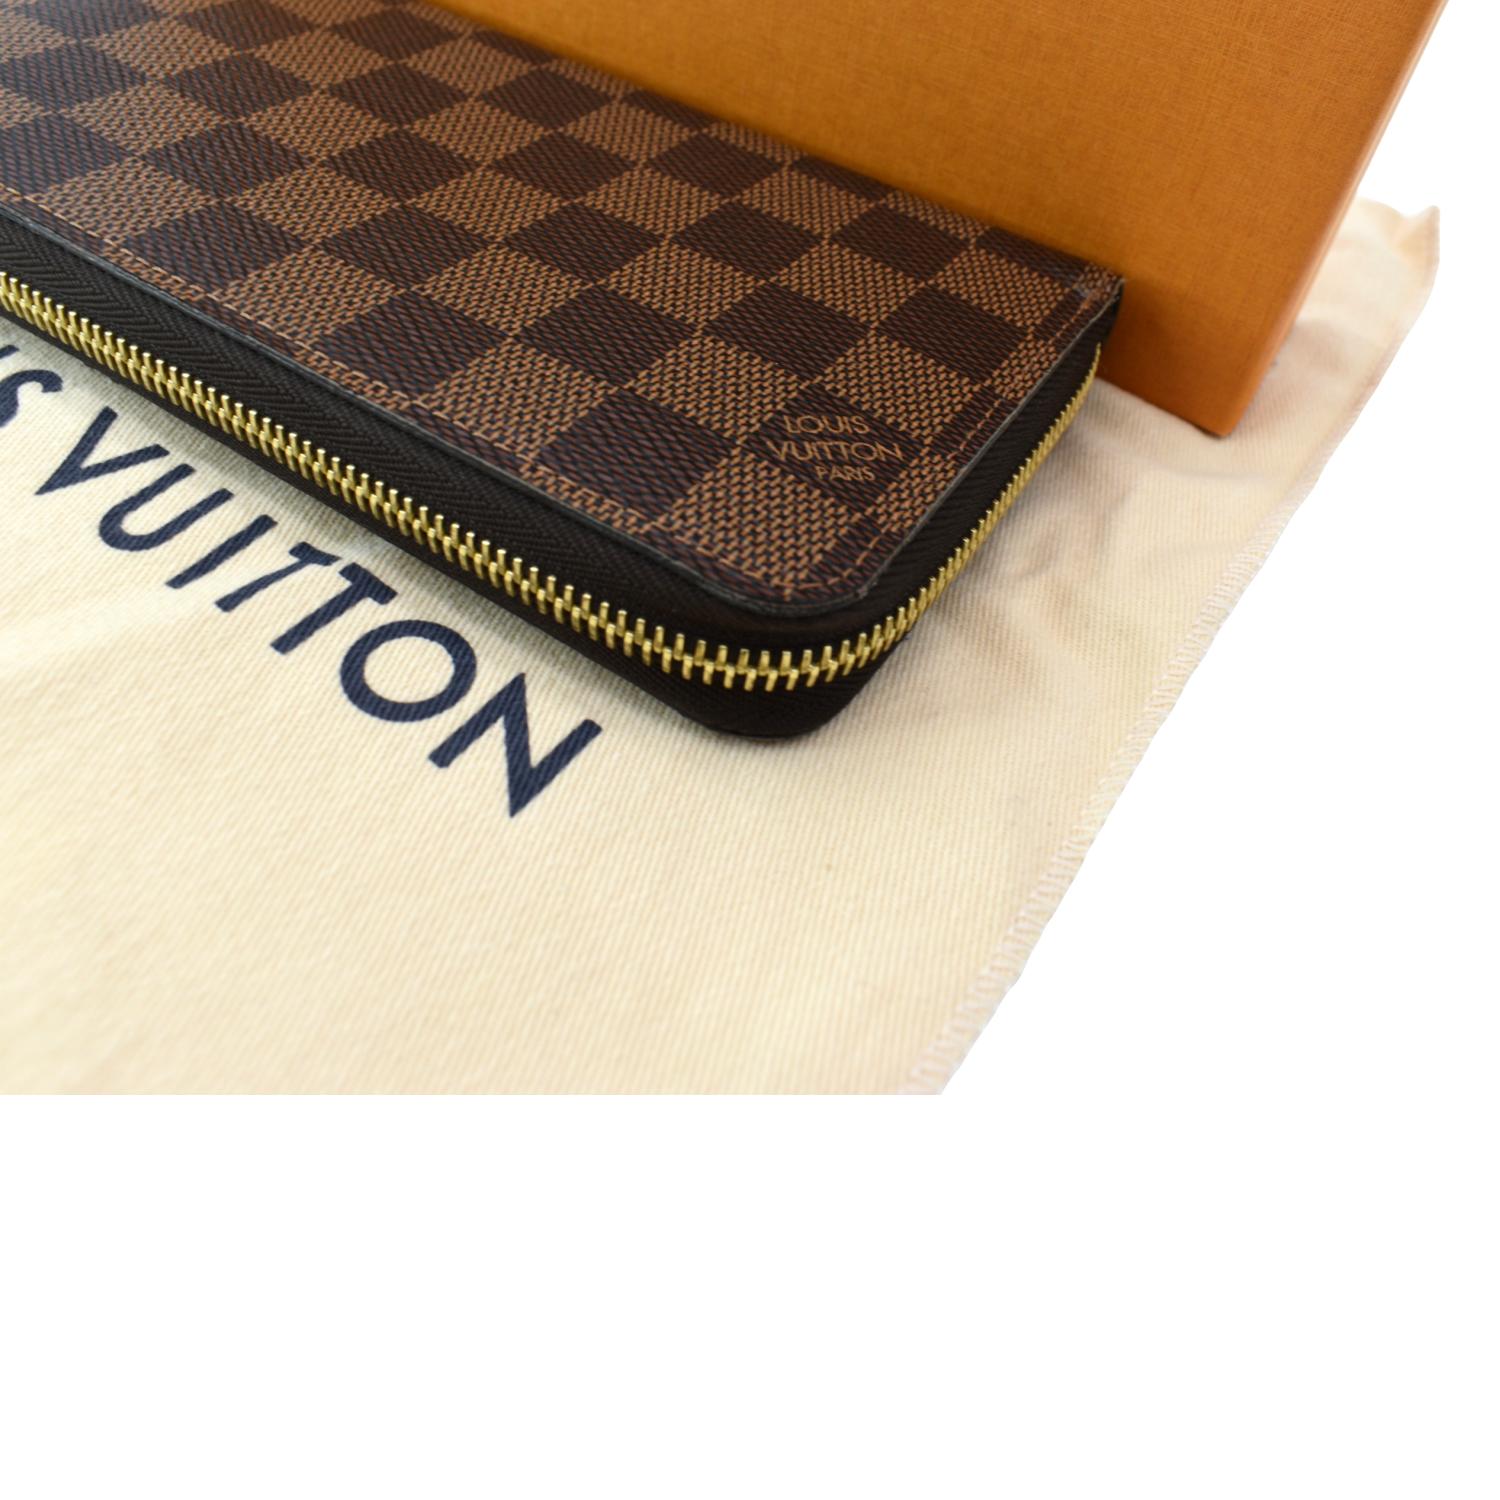 Louis Vuitton Zippy NM Damier Graphite Long Wallet